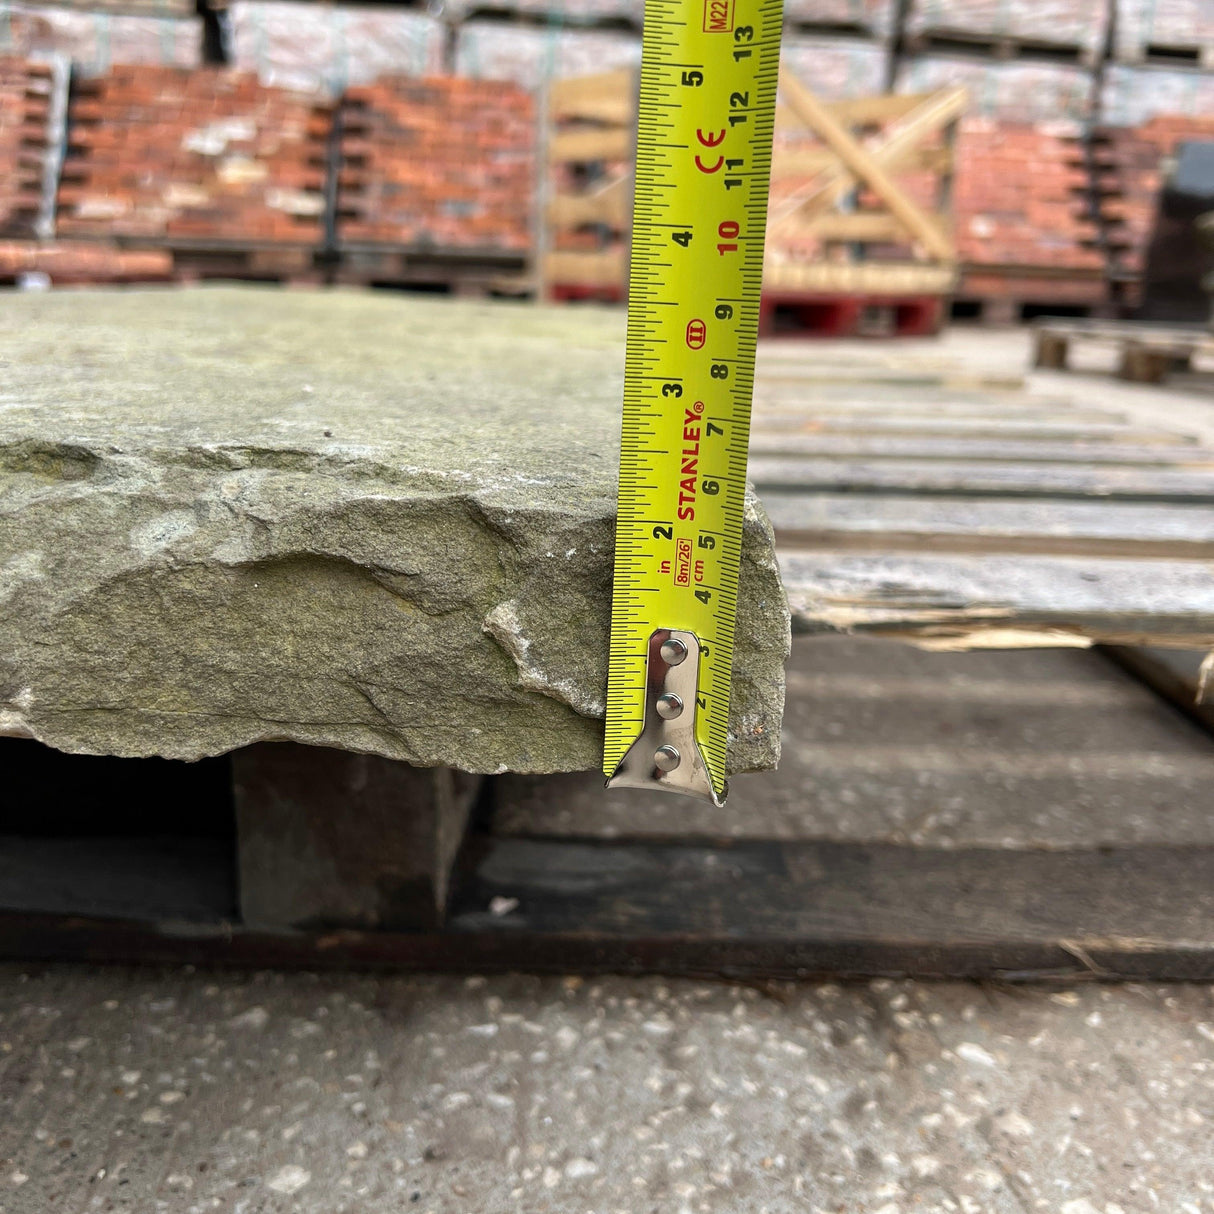 5cm Reclaimed Stone Step - Reclaimed Brick Company